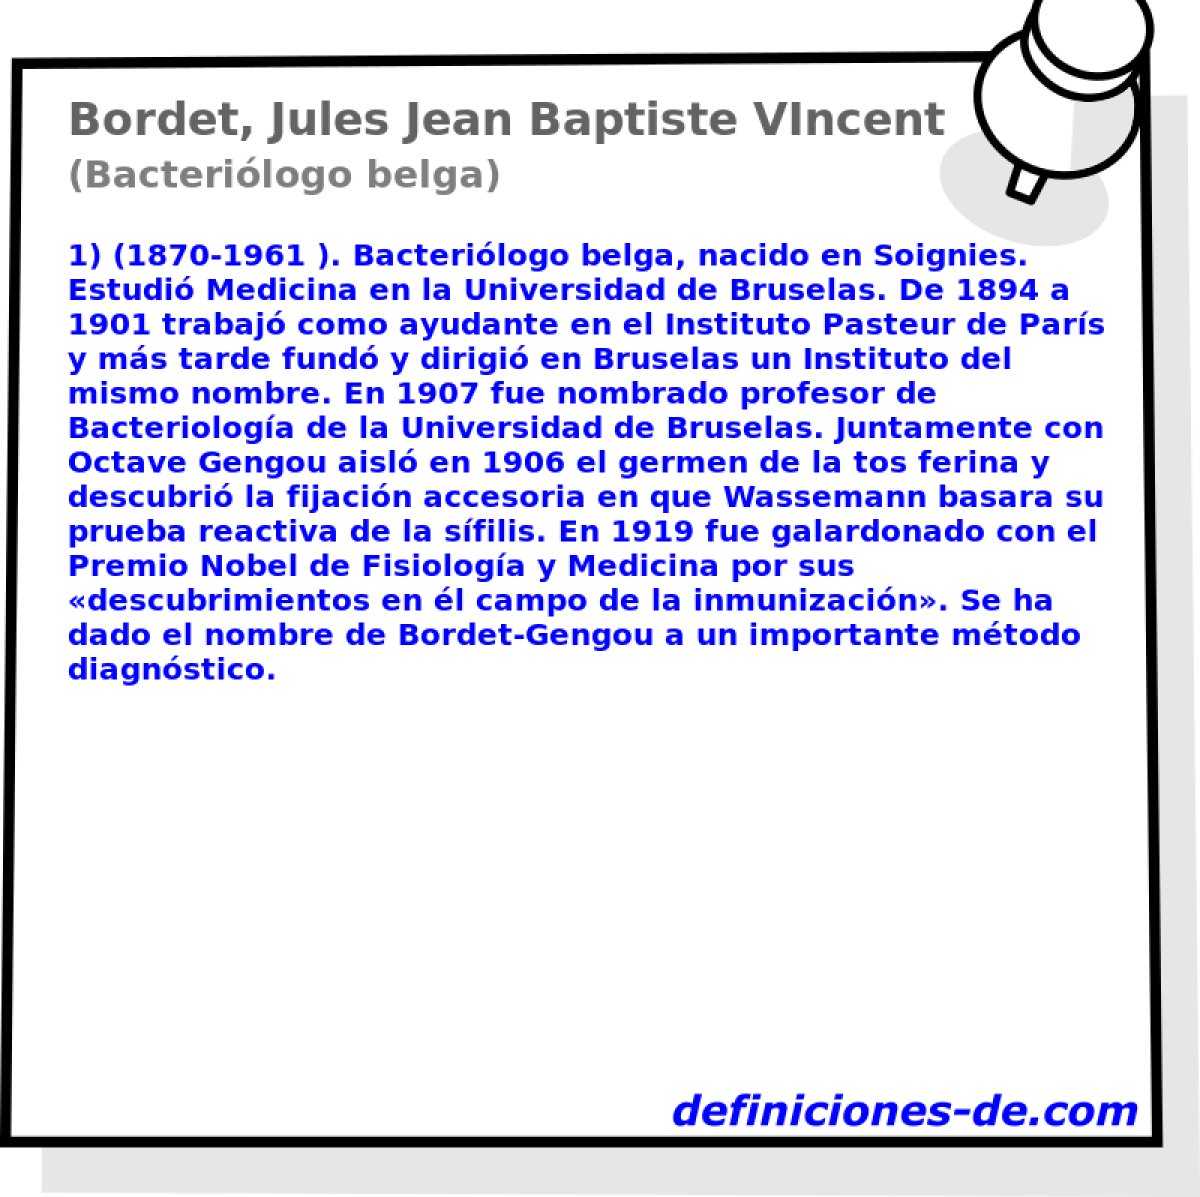 Bordet, Jules Jean Baptiste VIncent (Bacterilogo belga)